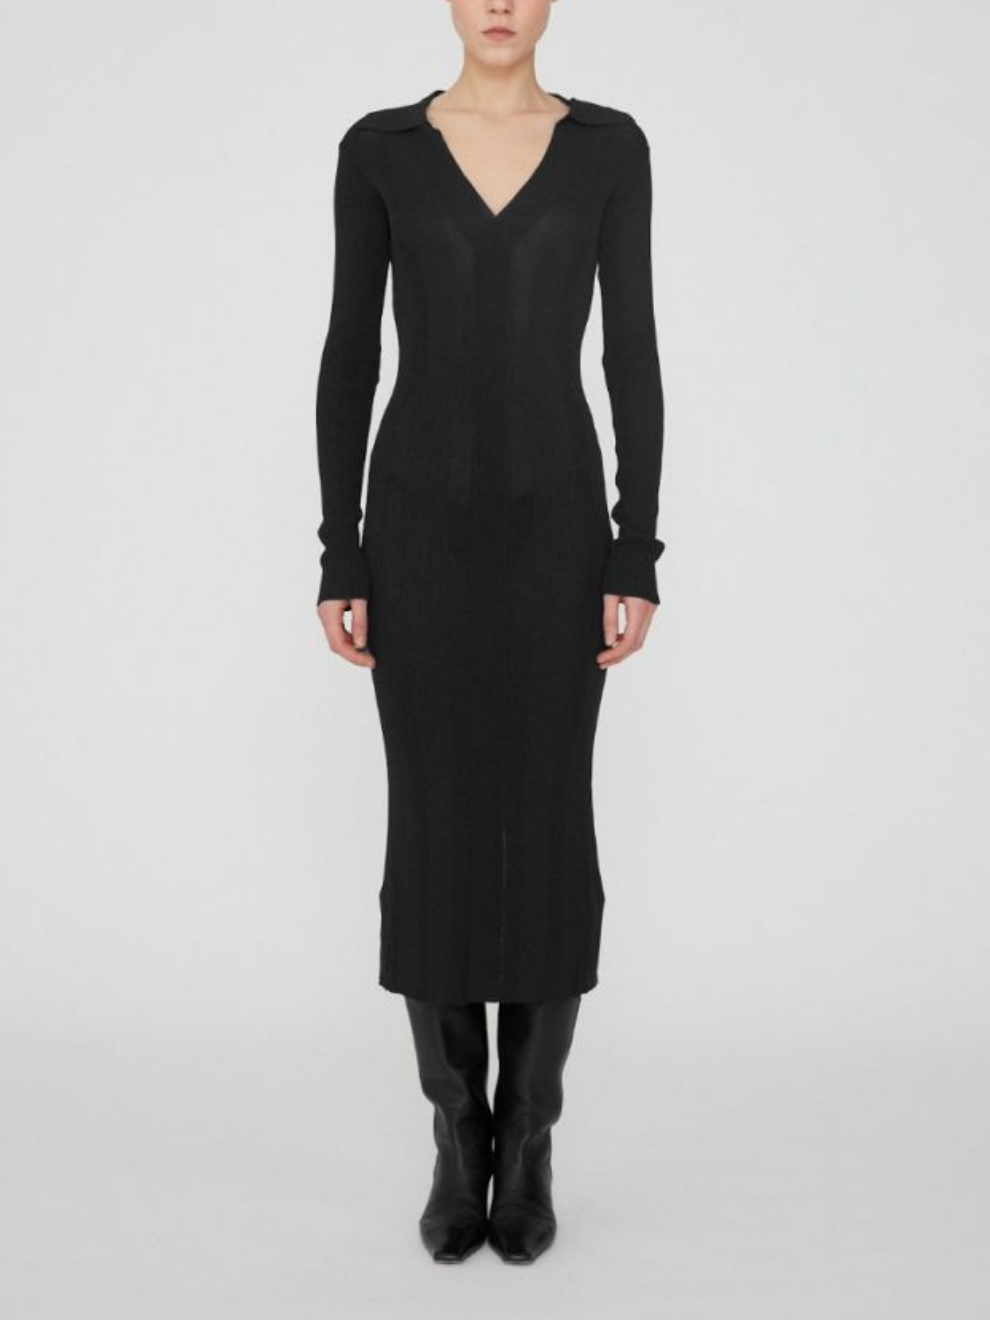 REMAIN Birger Christensen Joy knit Long Sleeve Dress in black